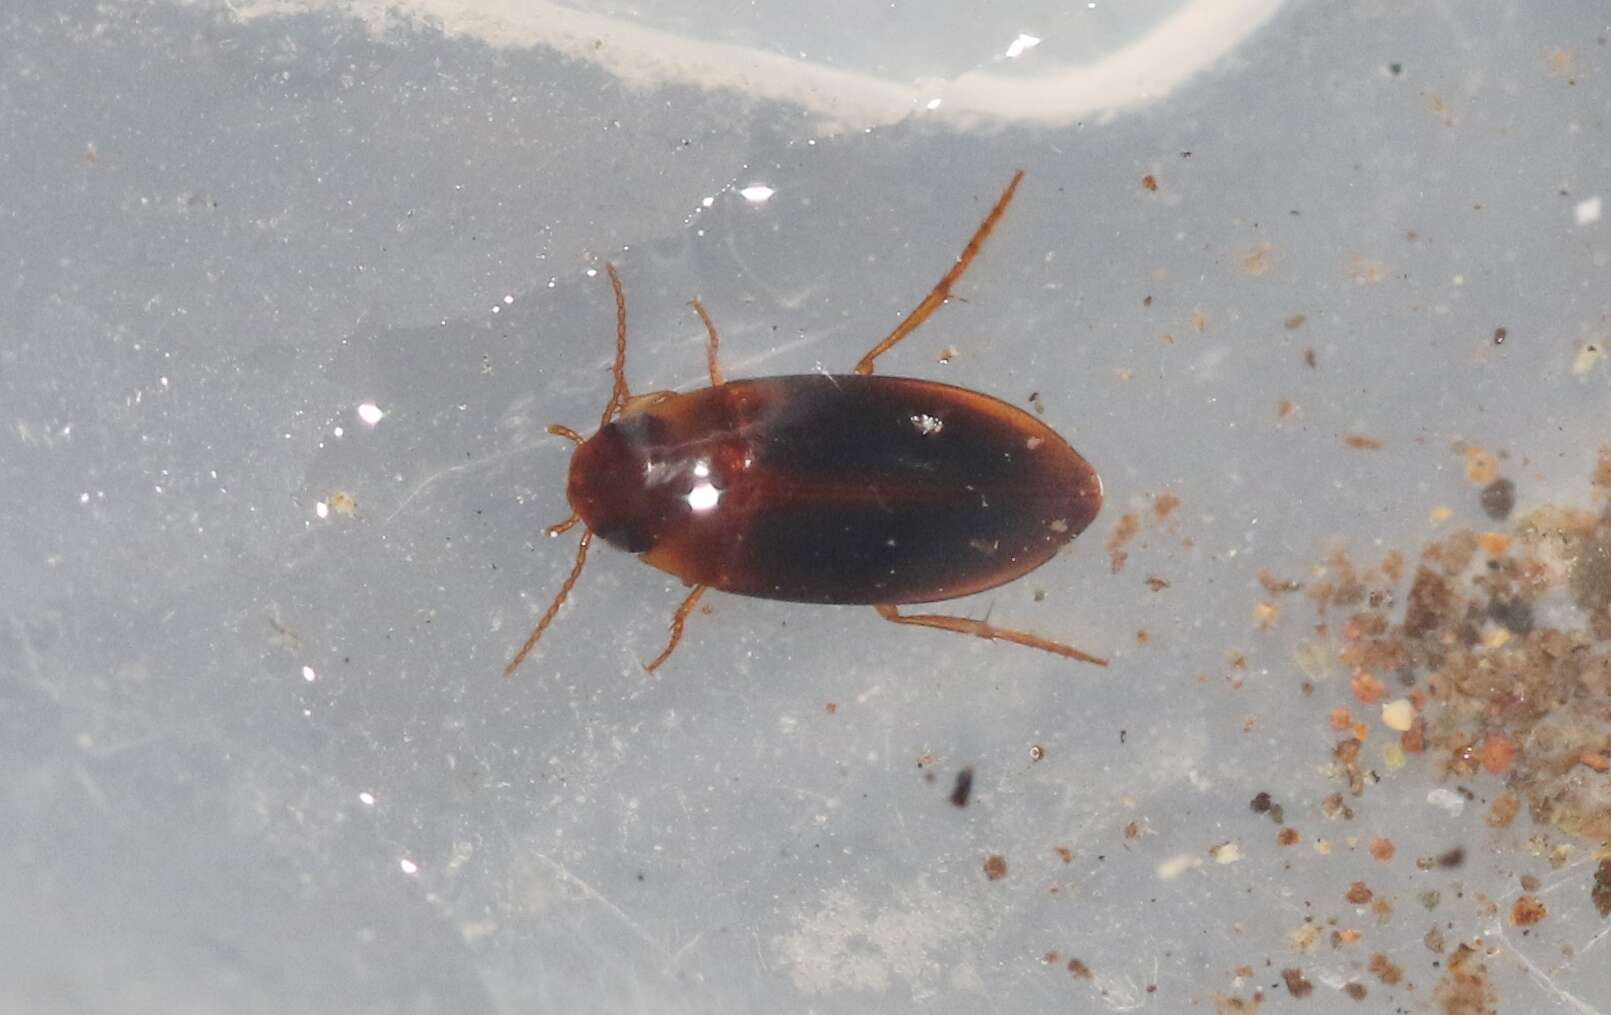 Image of Predaceous diving beetle